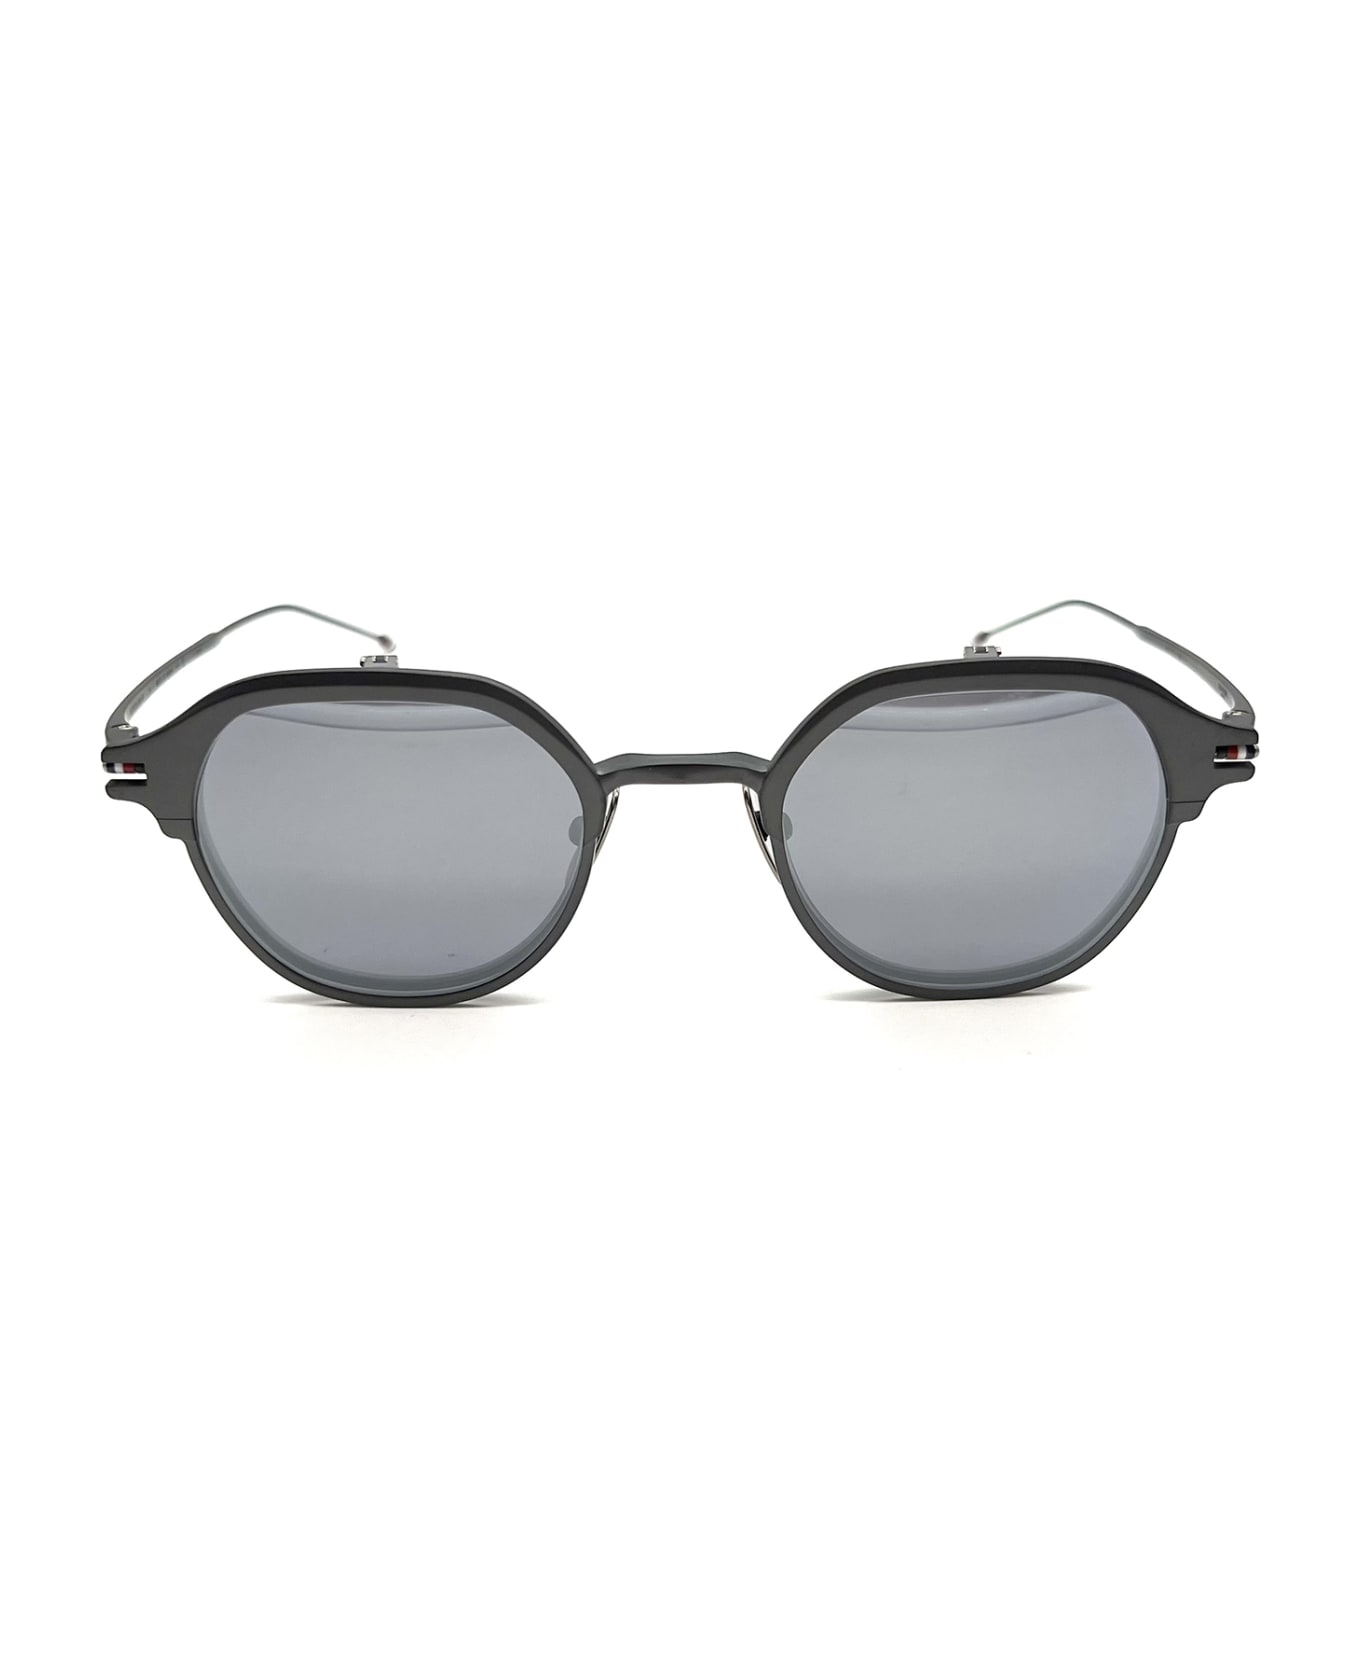 Thom Browne Ues812a/g0001 Sunglasses - Black/charcoal